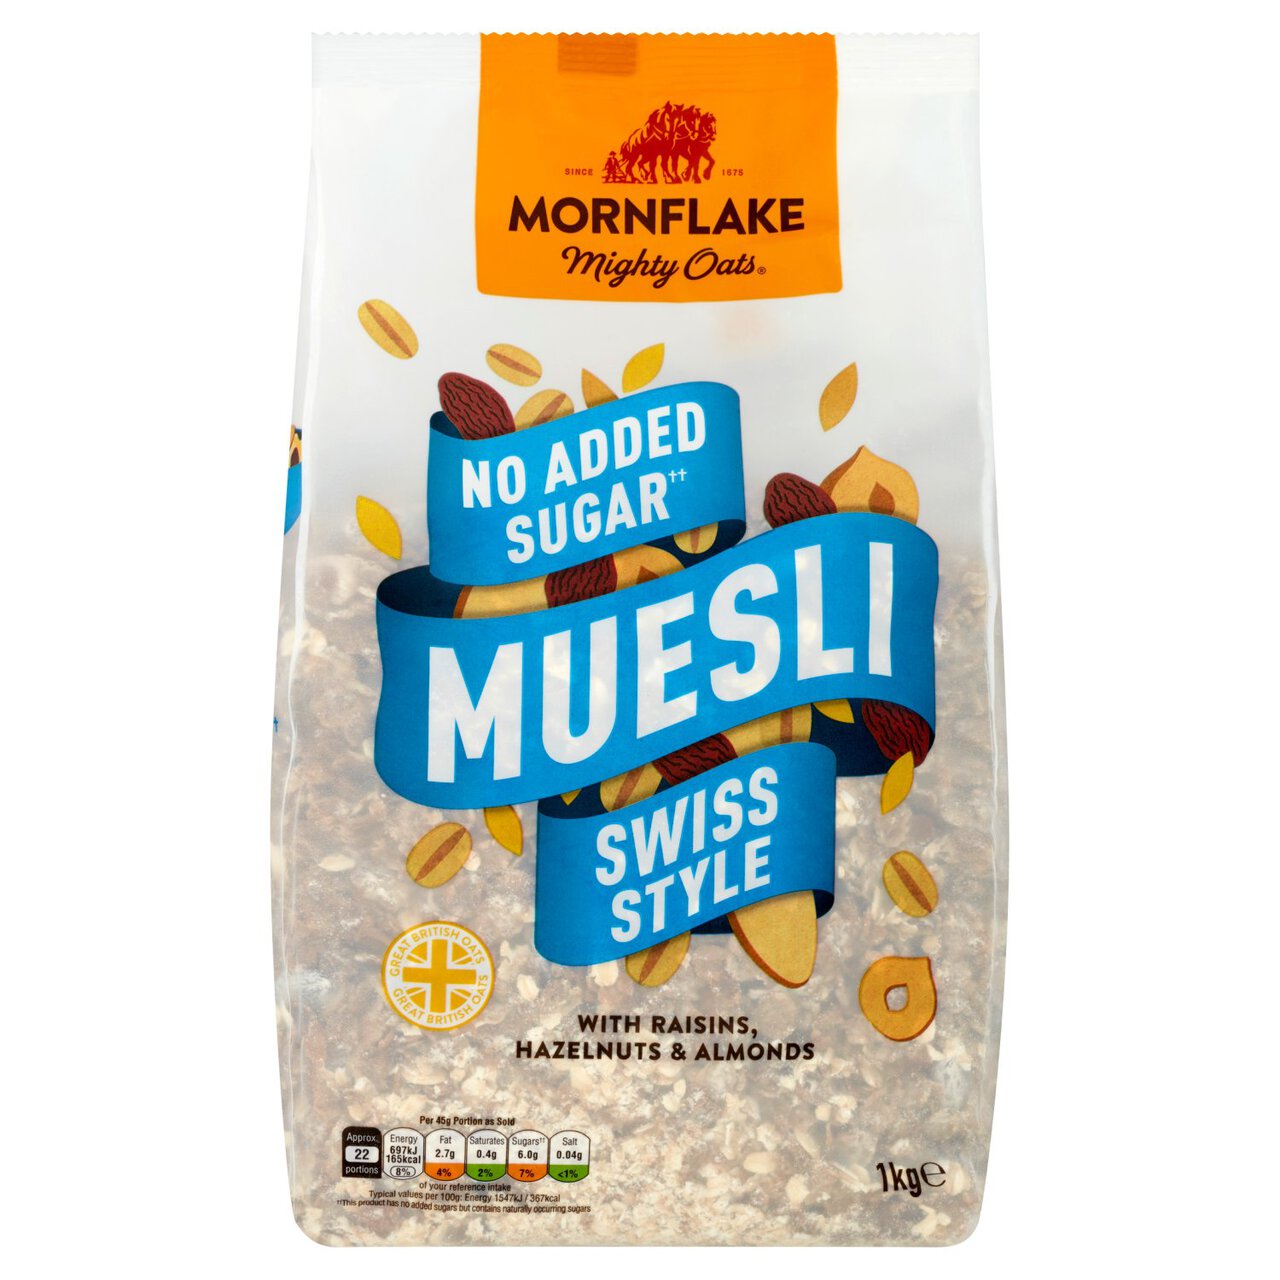 Mornflake Classic Swiss Style Muesli No Added Sugar 1.1kg